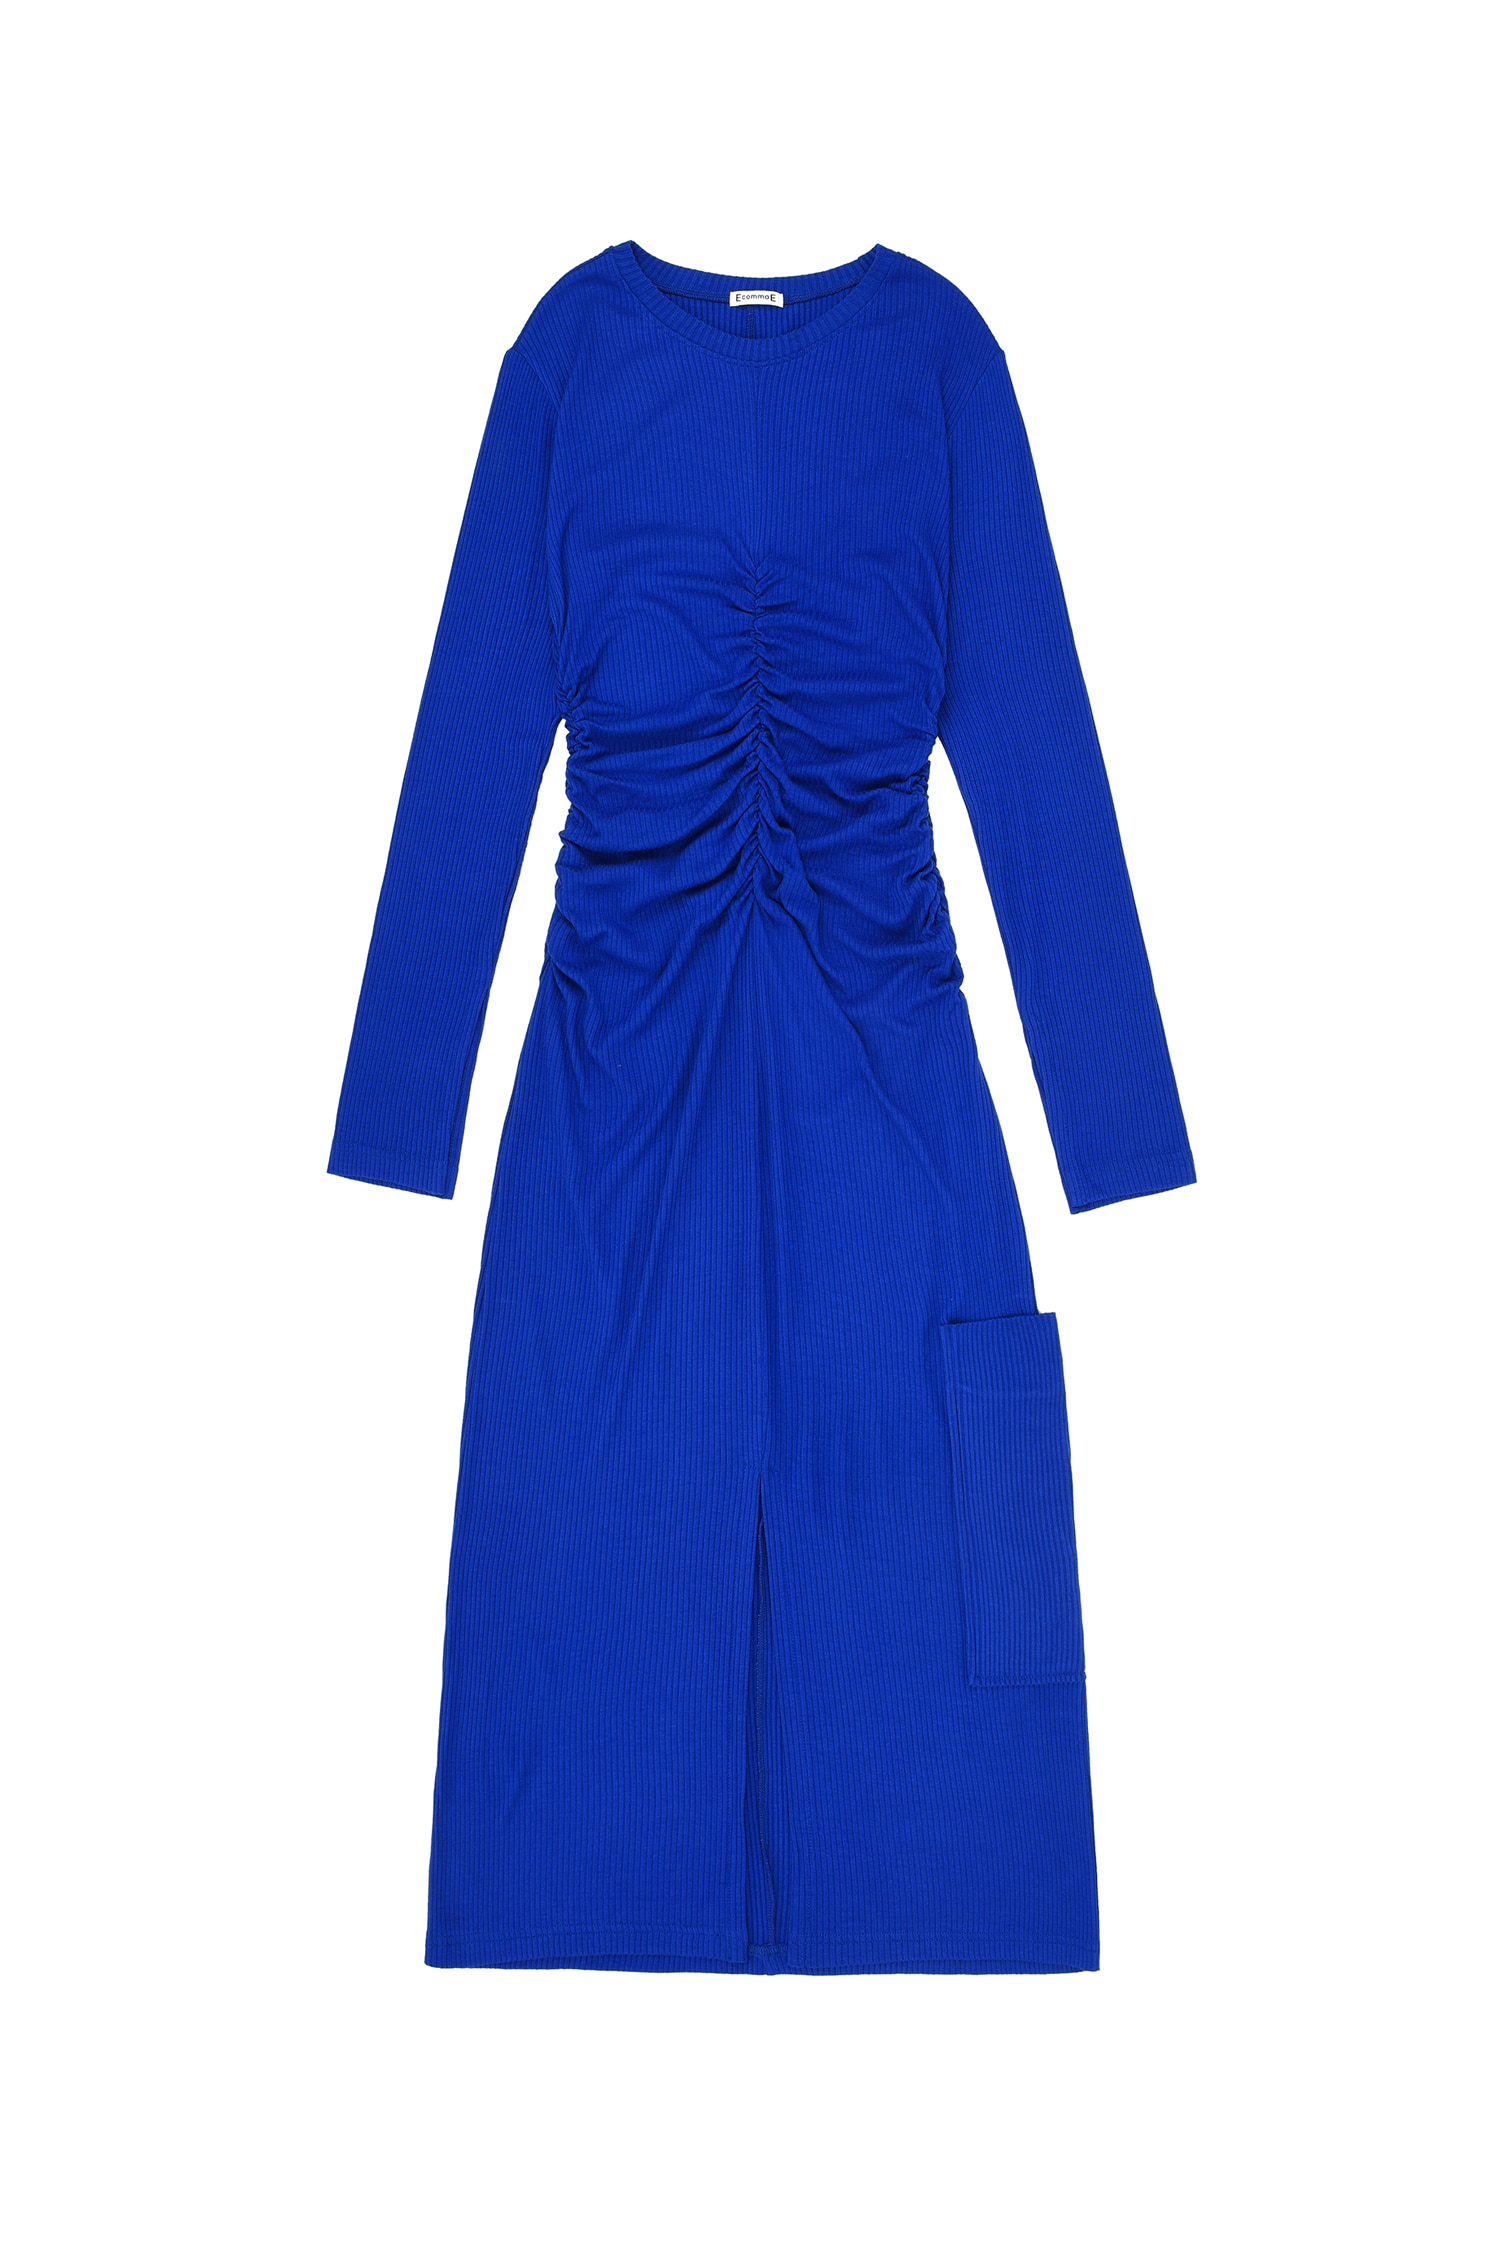 SHIRRING EASY DRESS (BLUE) (3colors)